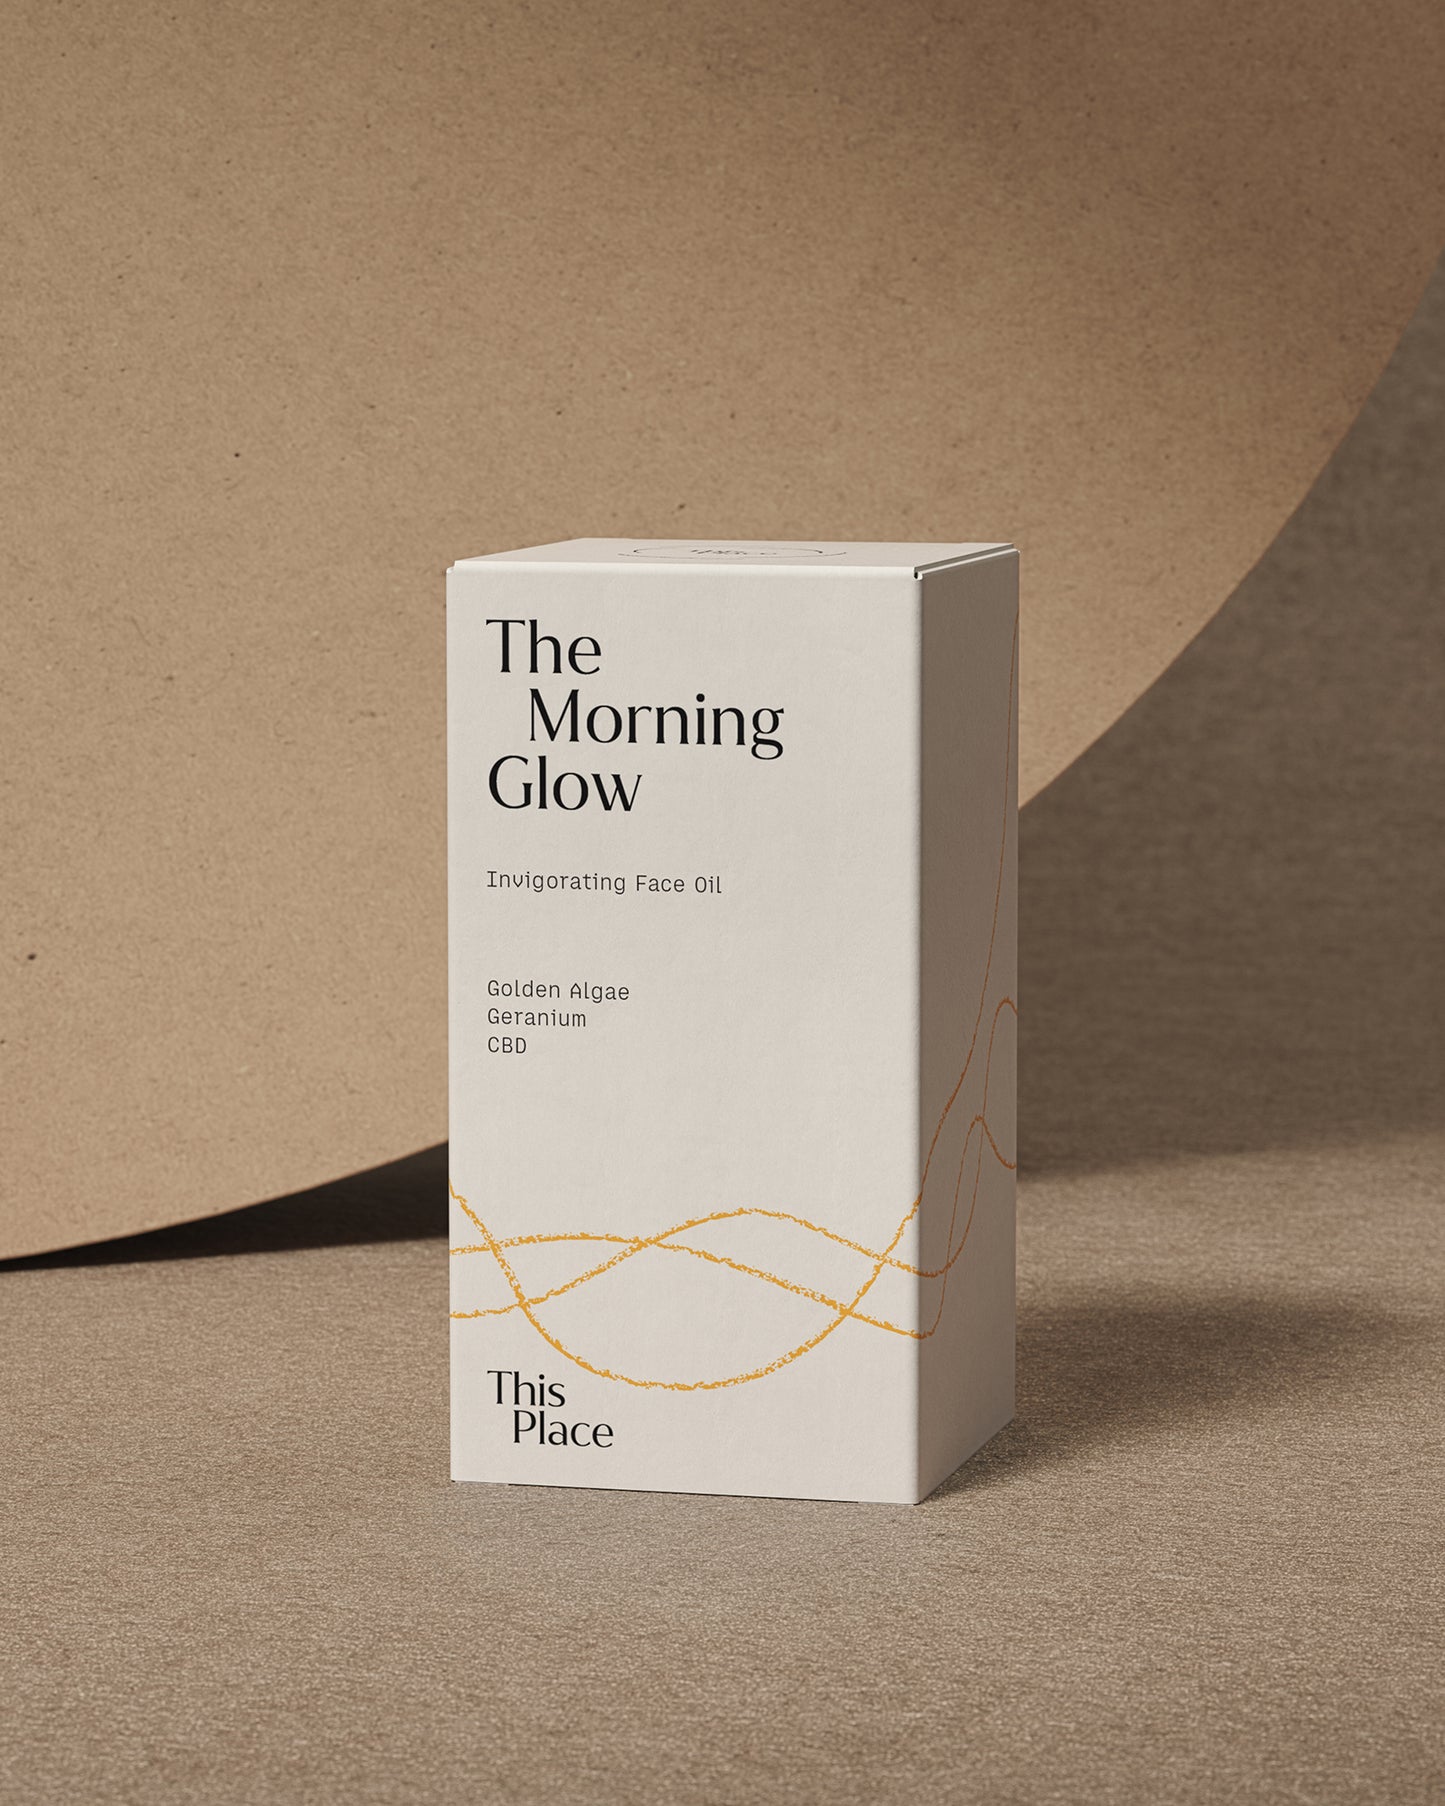 The Morning Glow – Invigorating facial oil